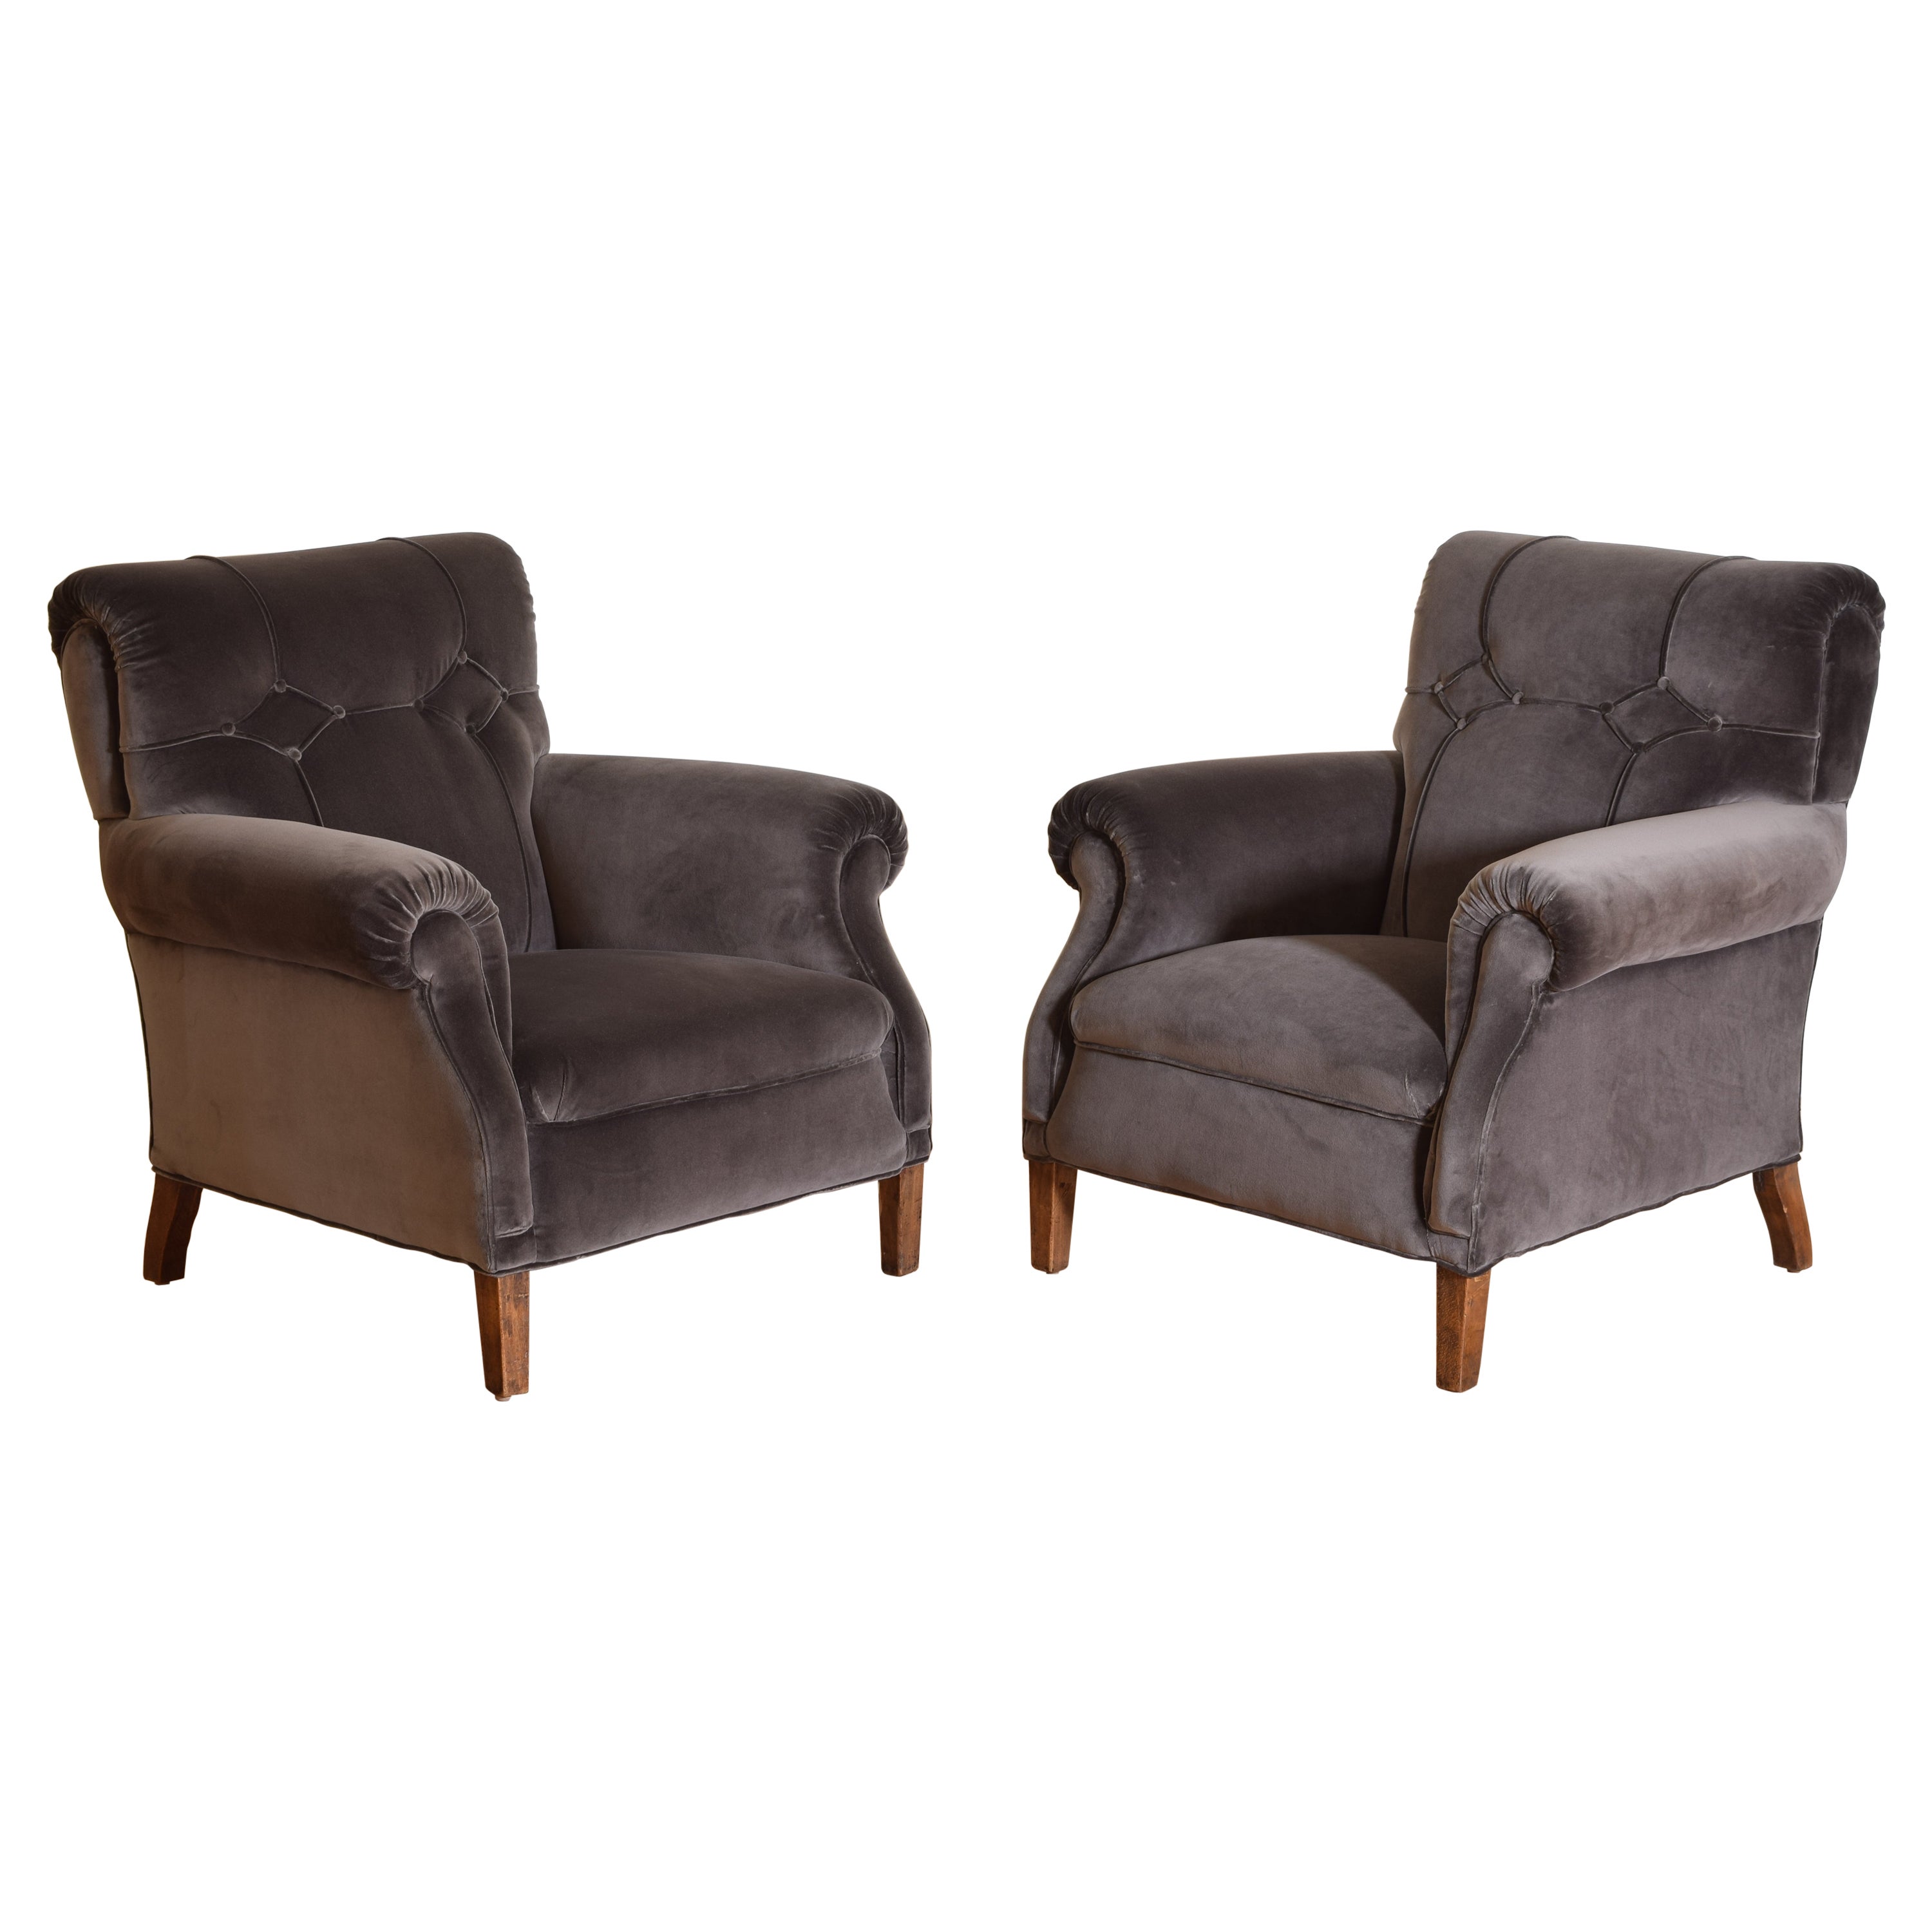 Pair Italian Poltrona Frau Velvet Upholstered Club Chairs, 2ndq 20th Century